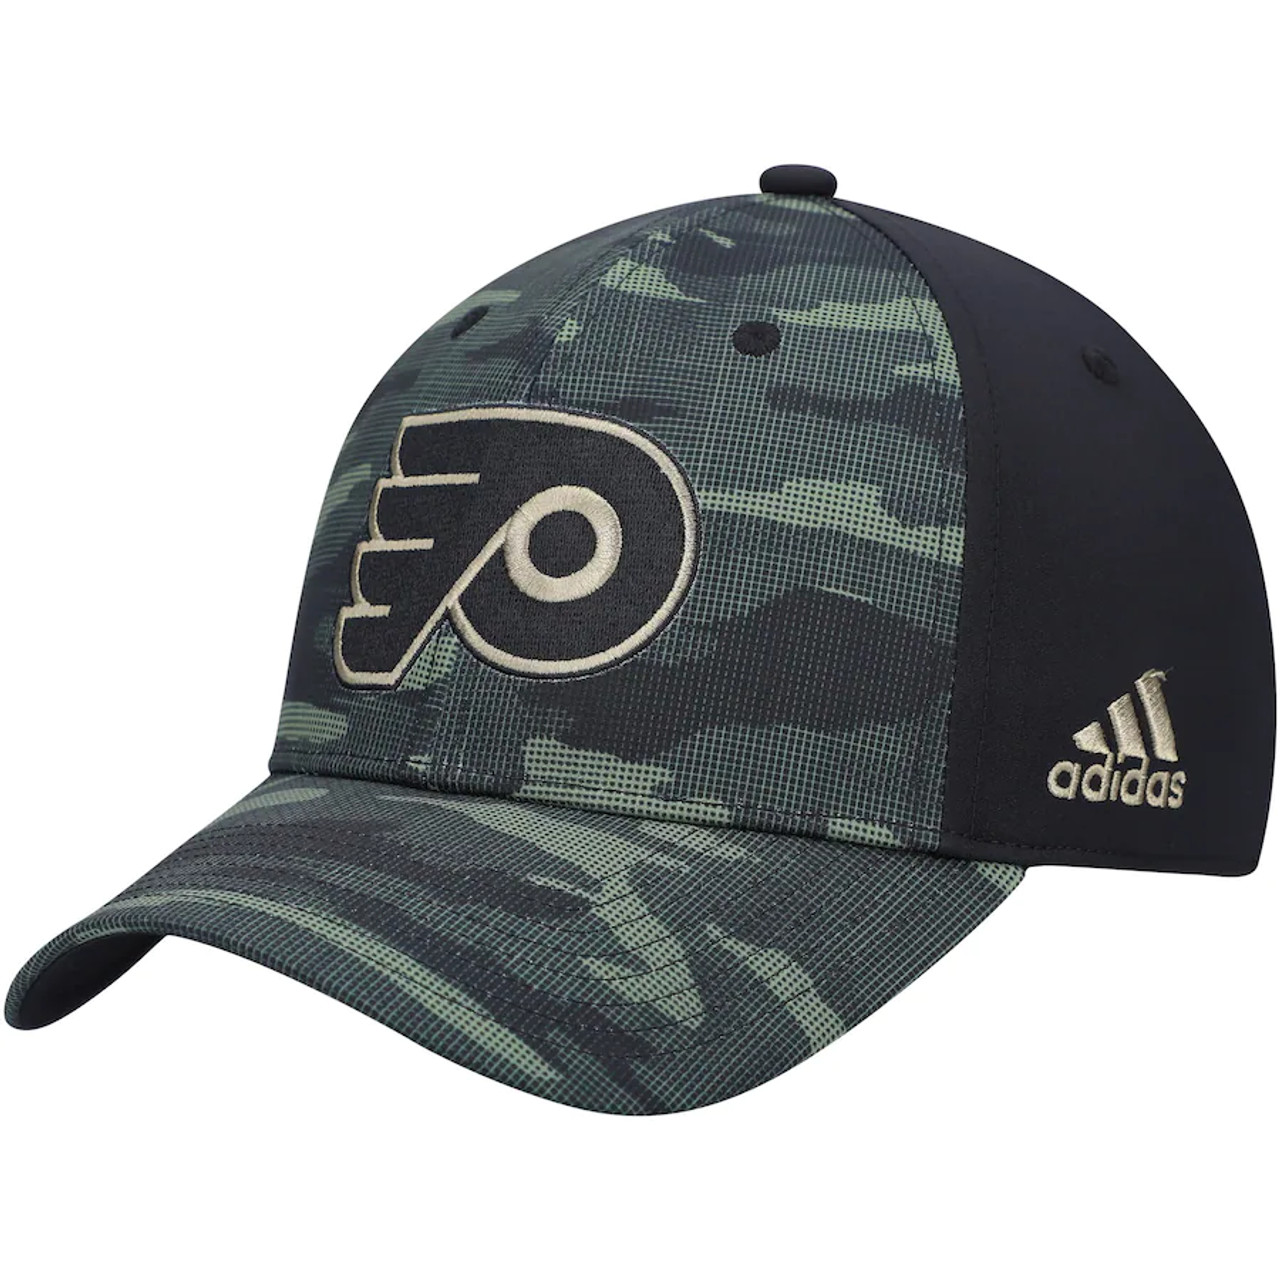 Adidas Philadelphia Flyers Military Appreciation Jersey - Adult